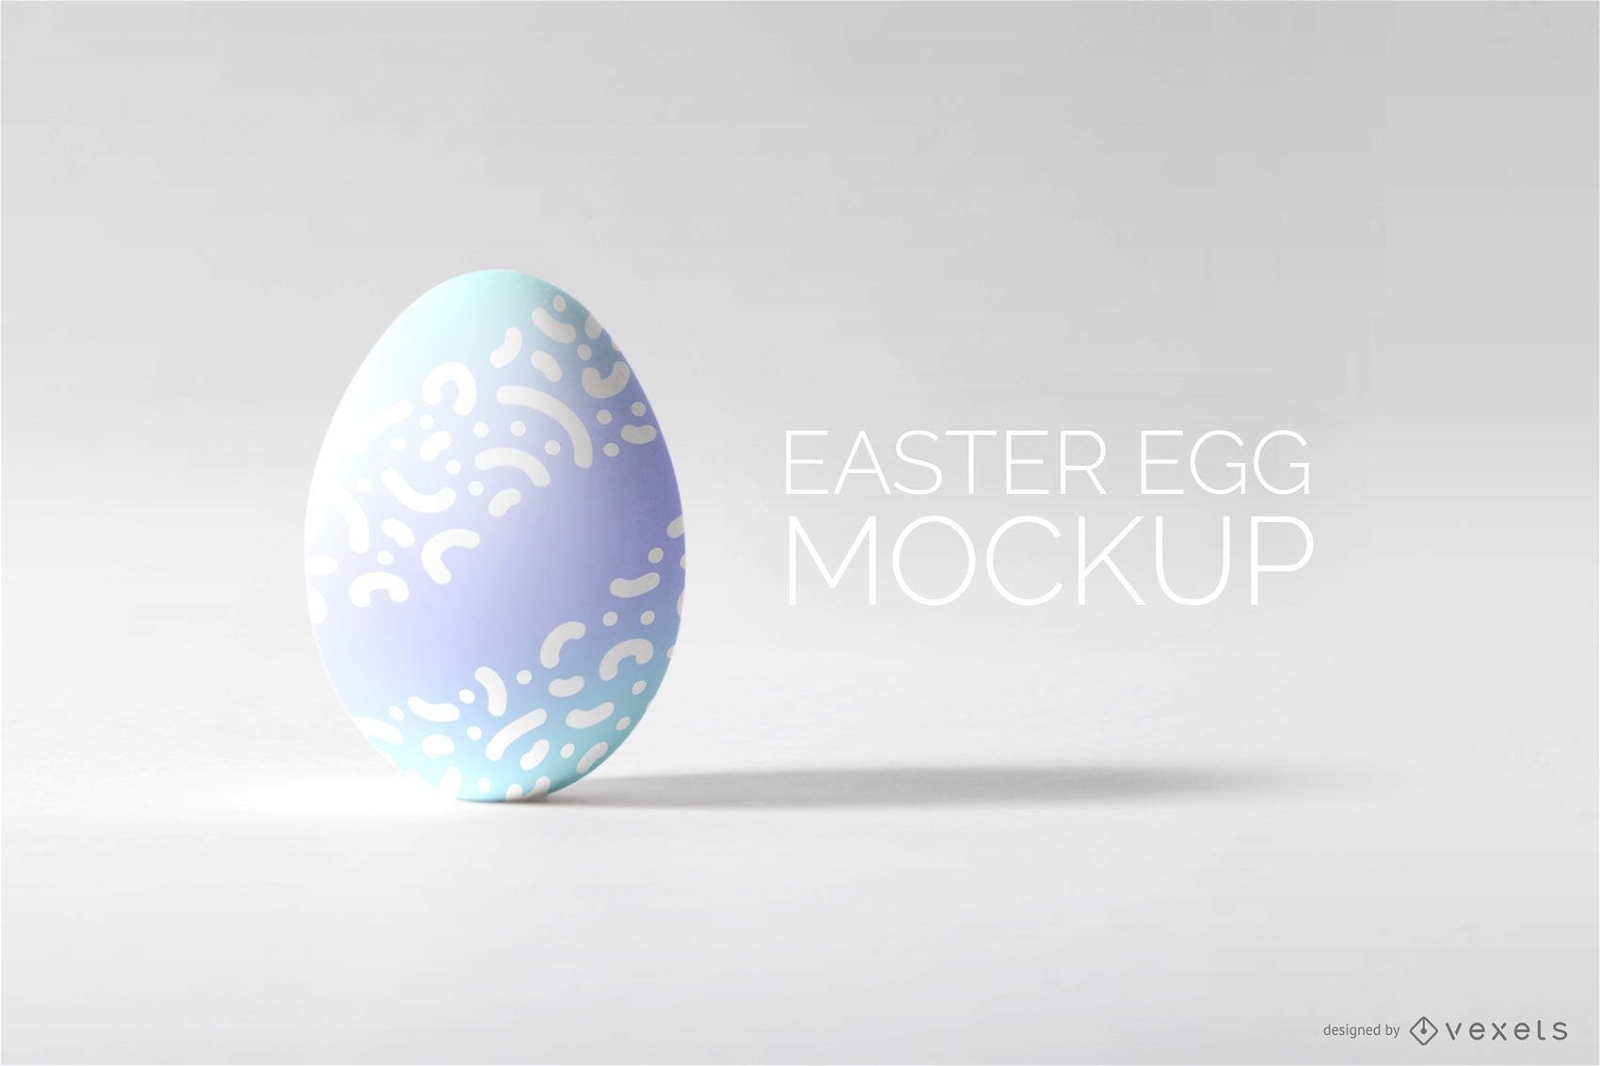 Easter egg mockup